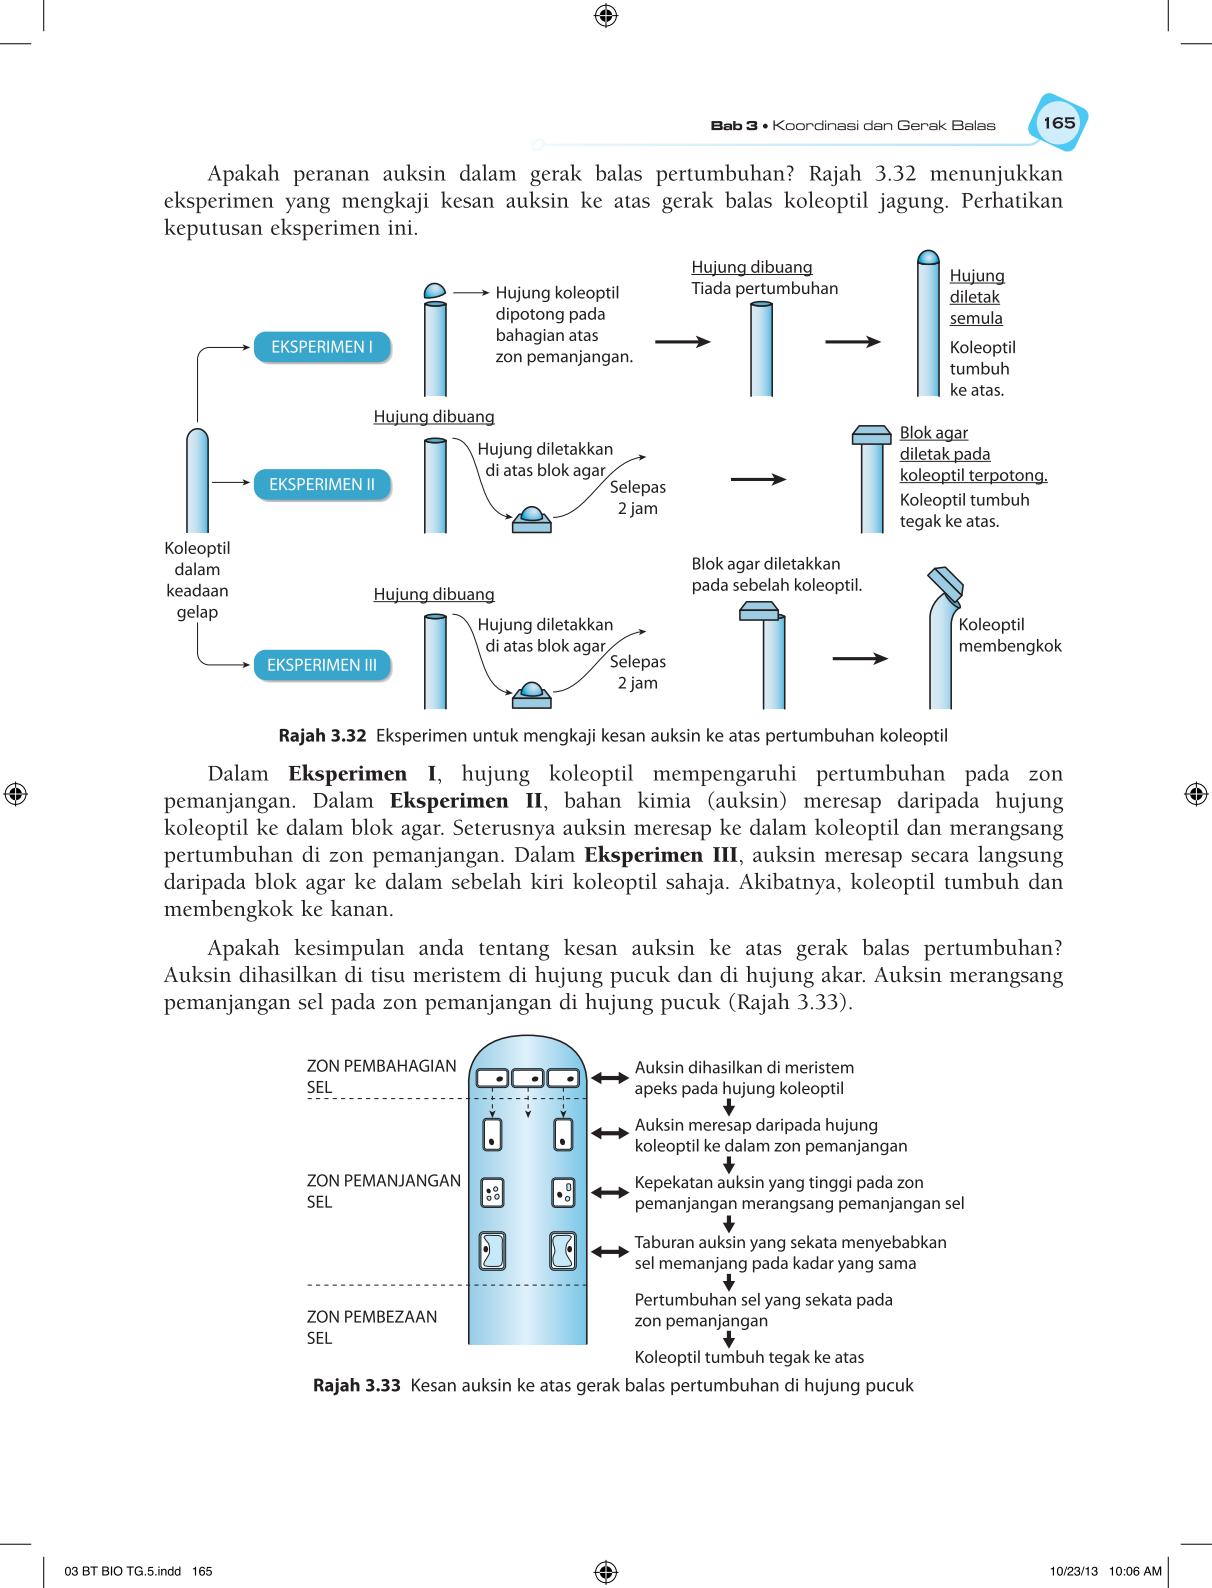 T5 : Biology TB BM Page177